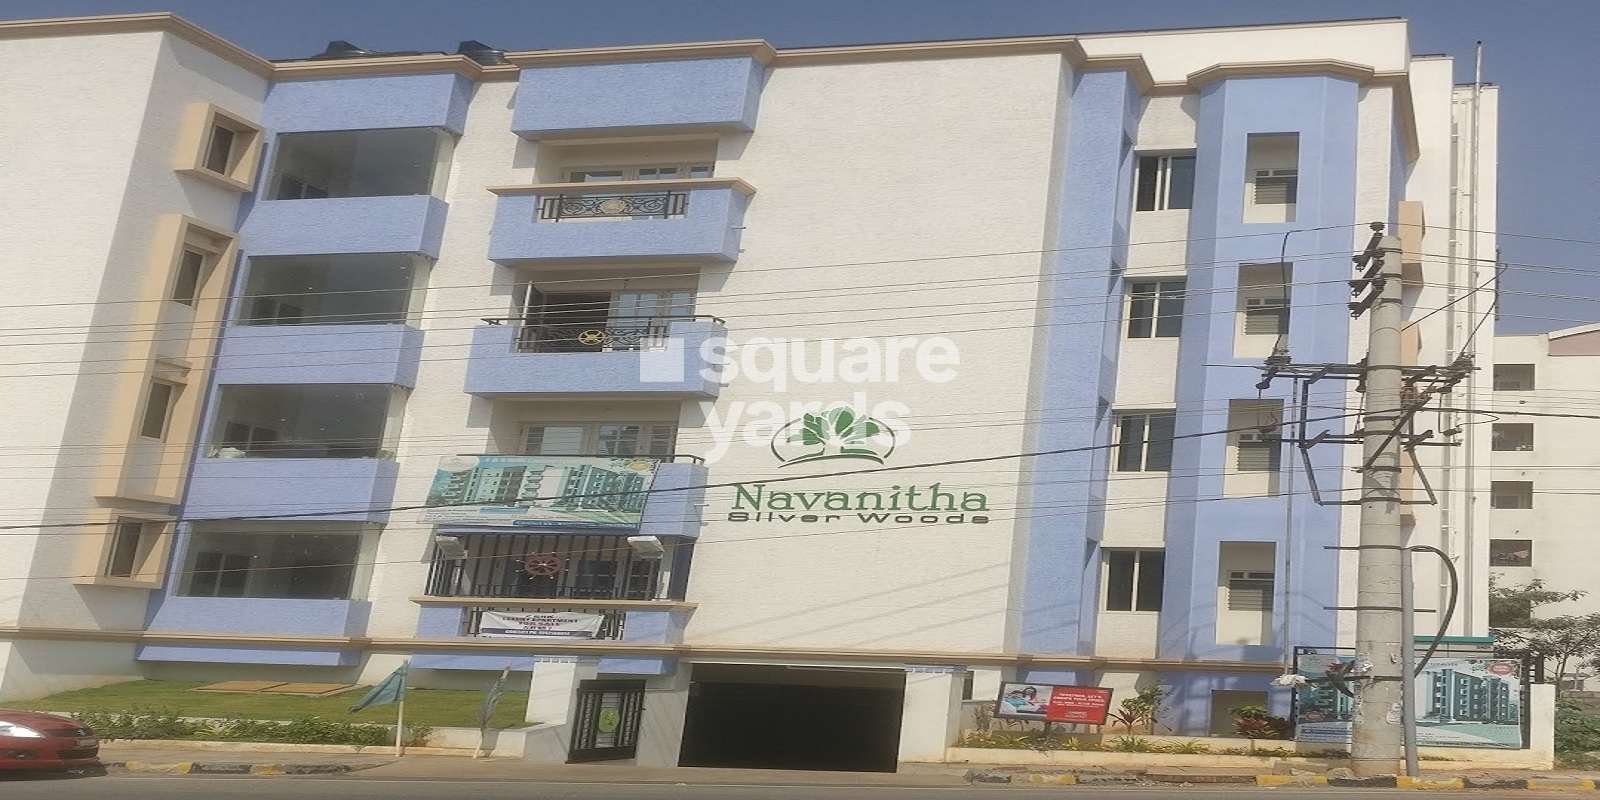 Navanitha Silverwoods Apartments Cover Image